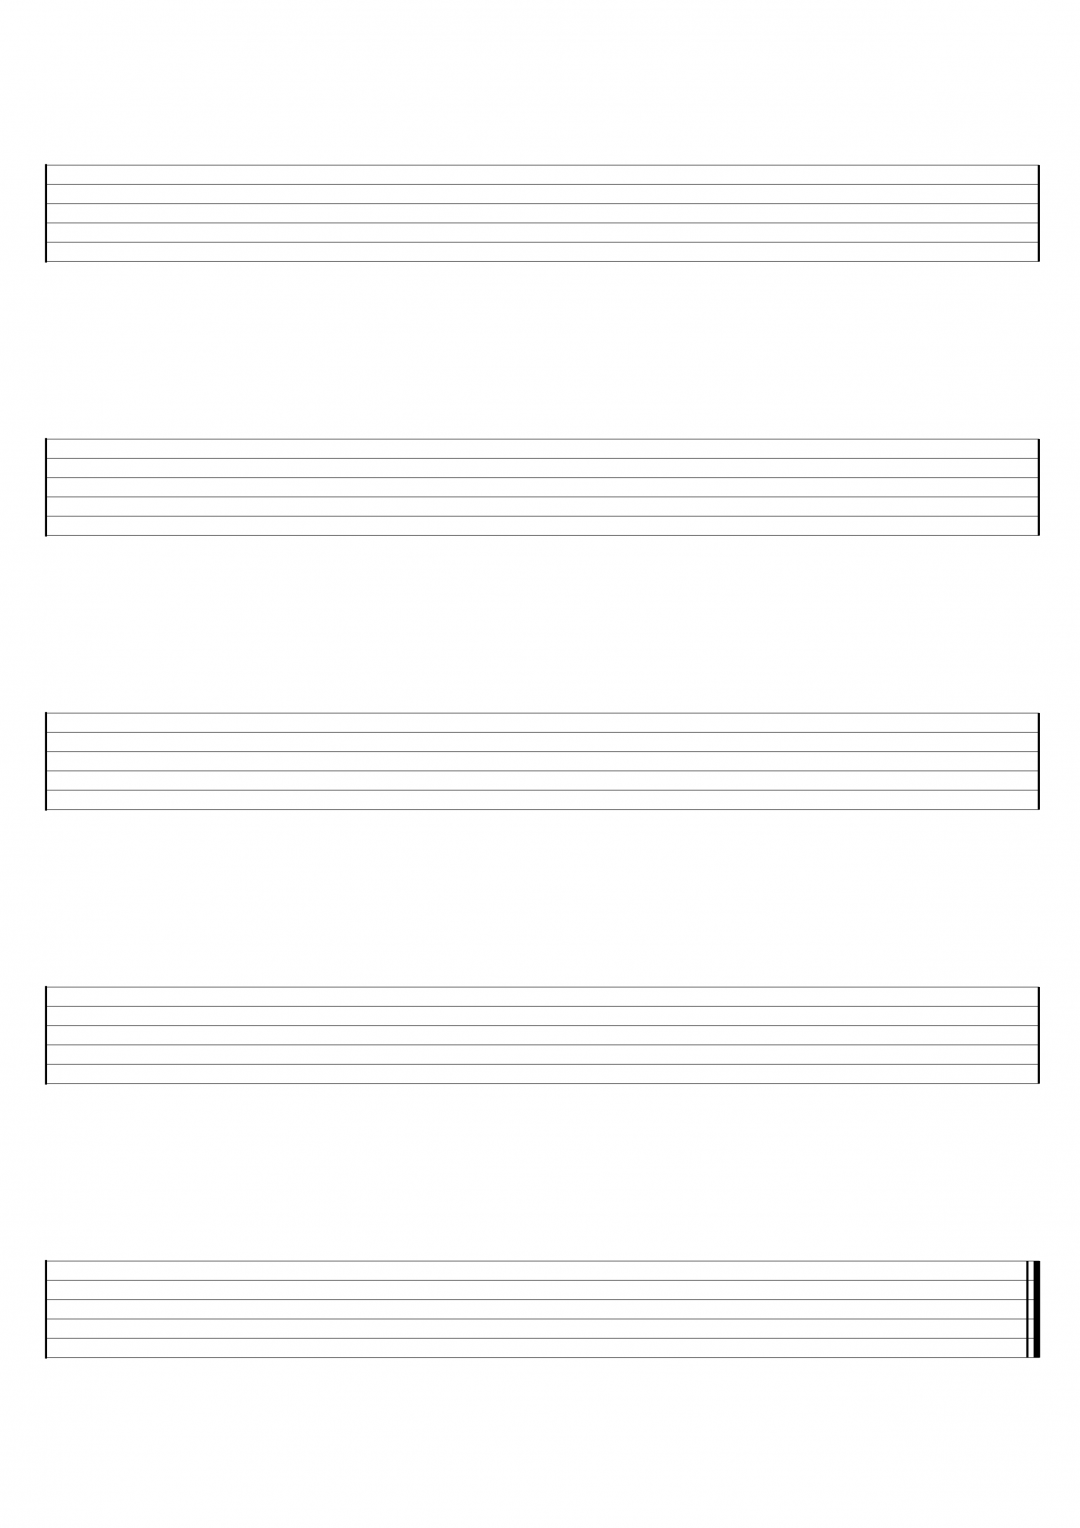 guitar tab sheet blank